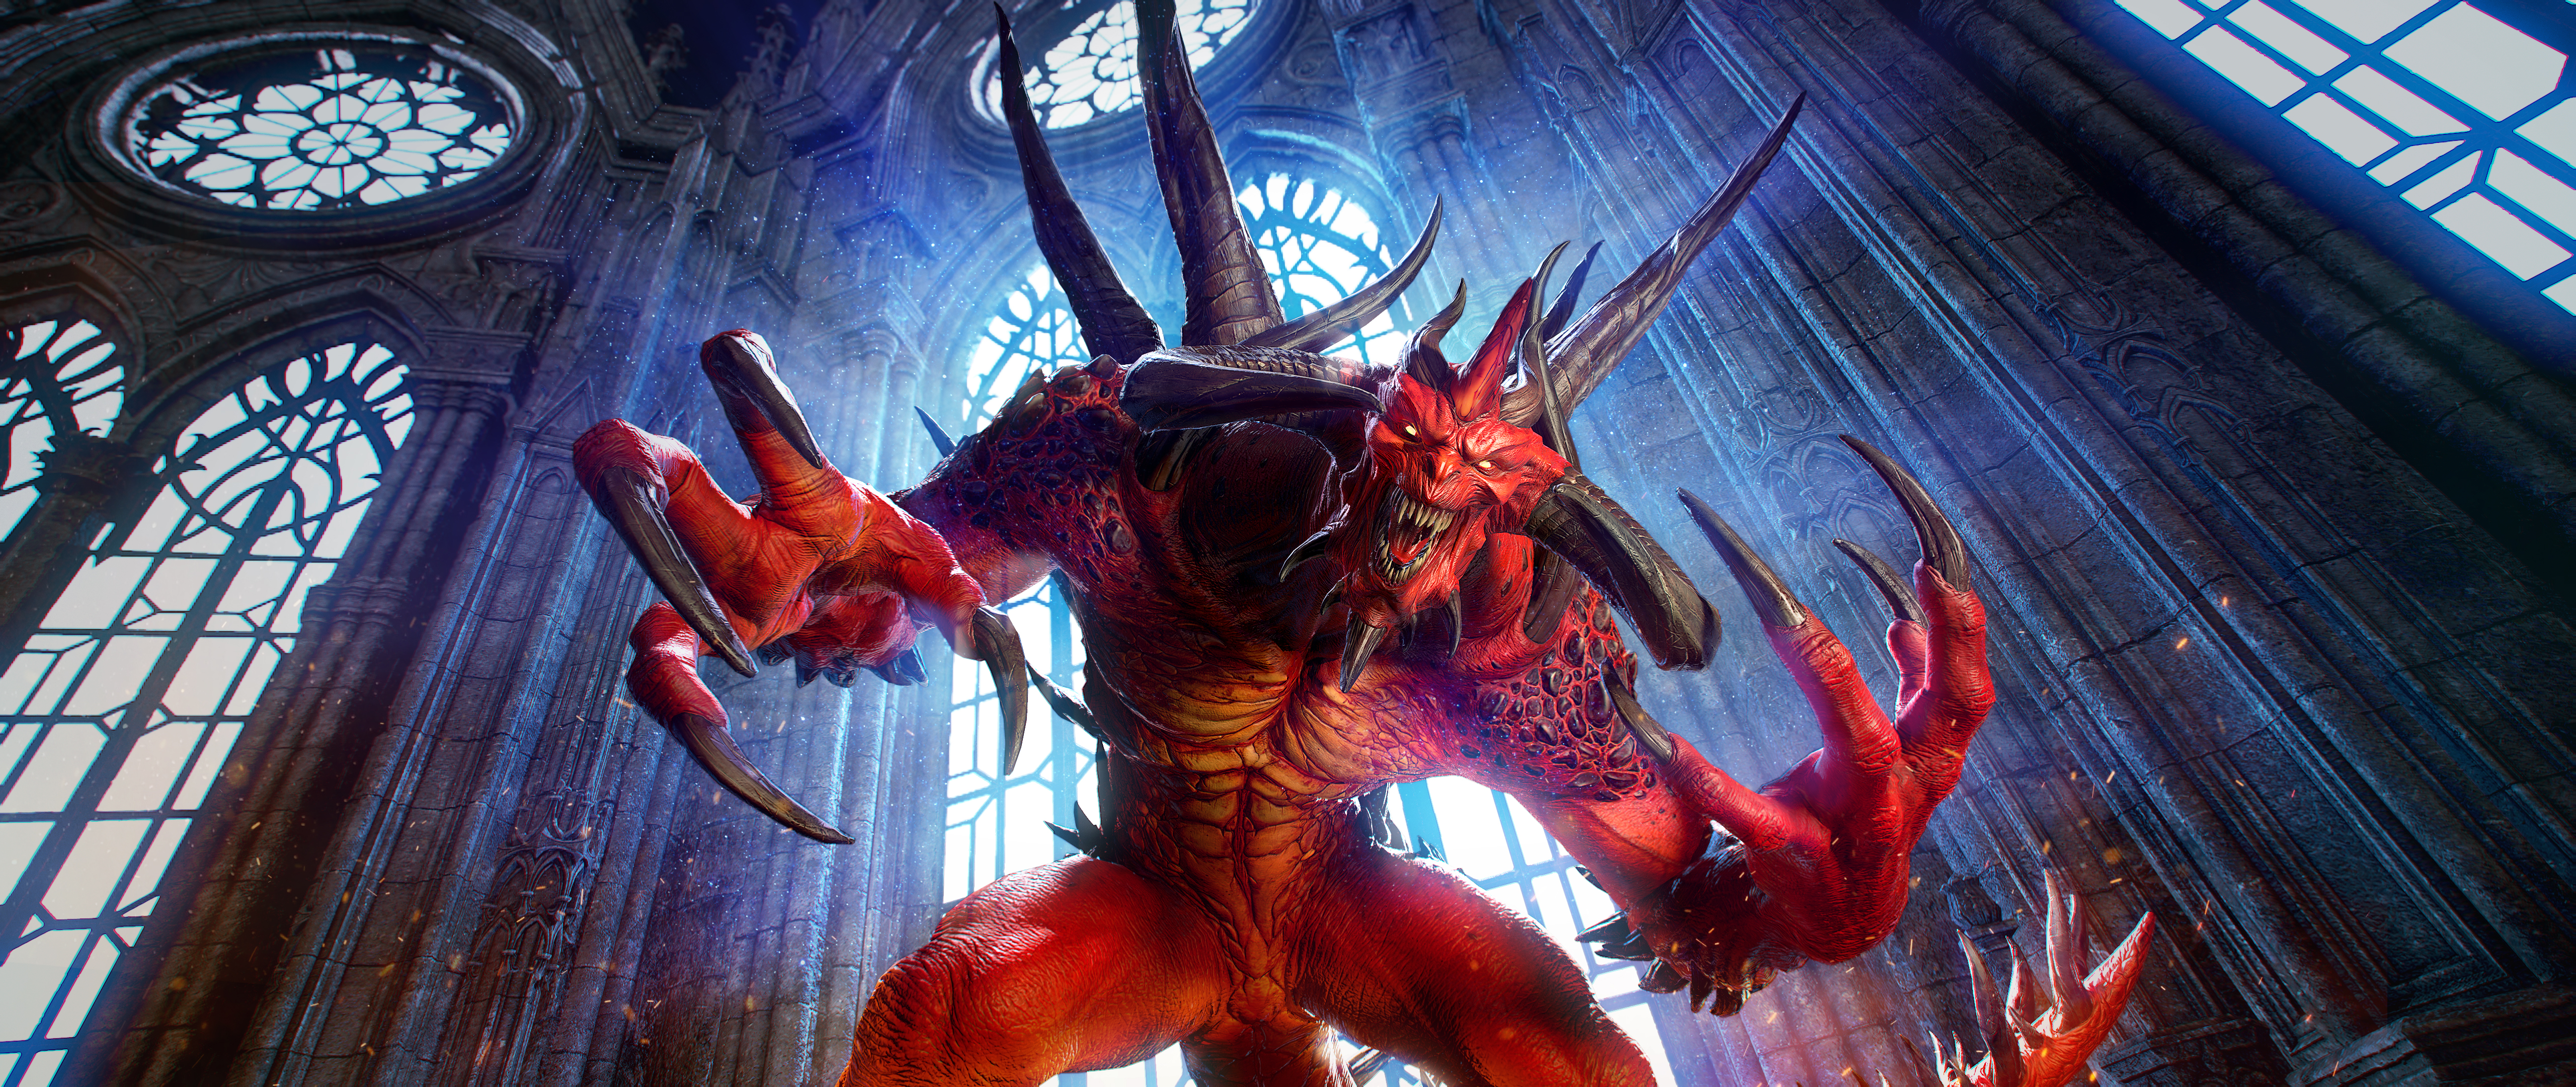 Video Game Diablo II: Resurrected HD Wallpaper | Background Image